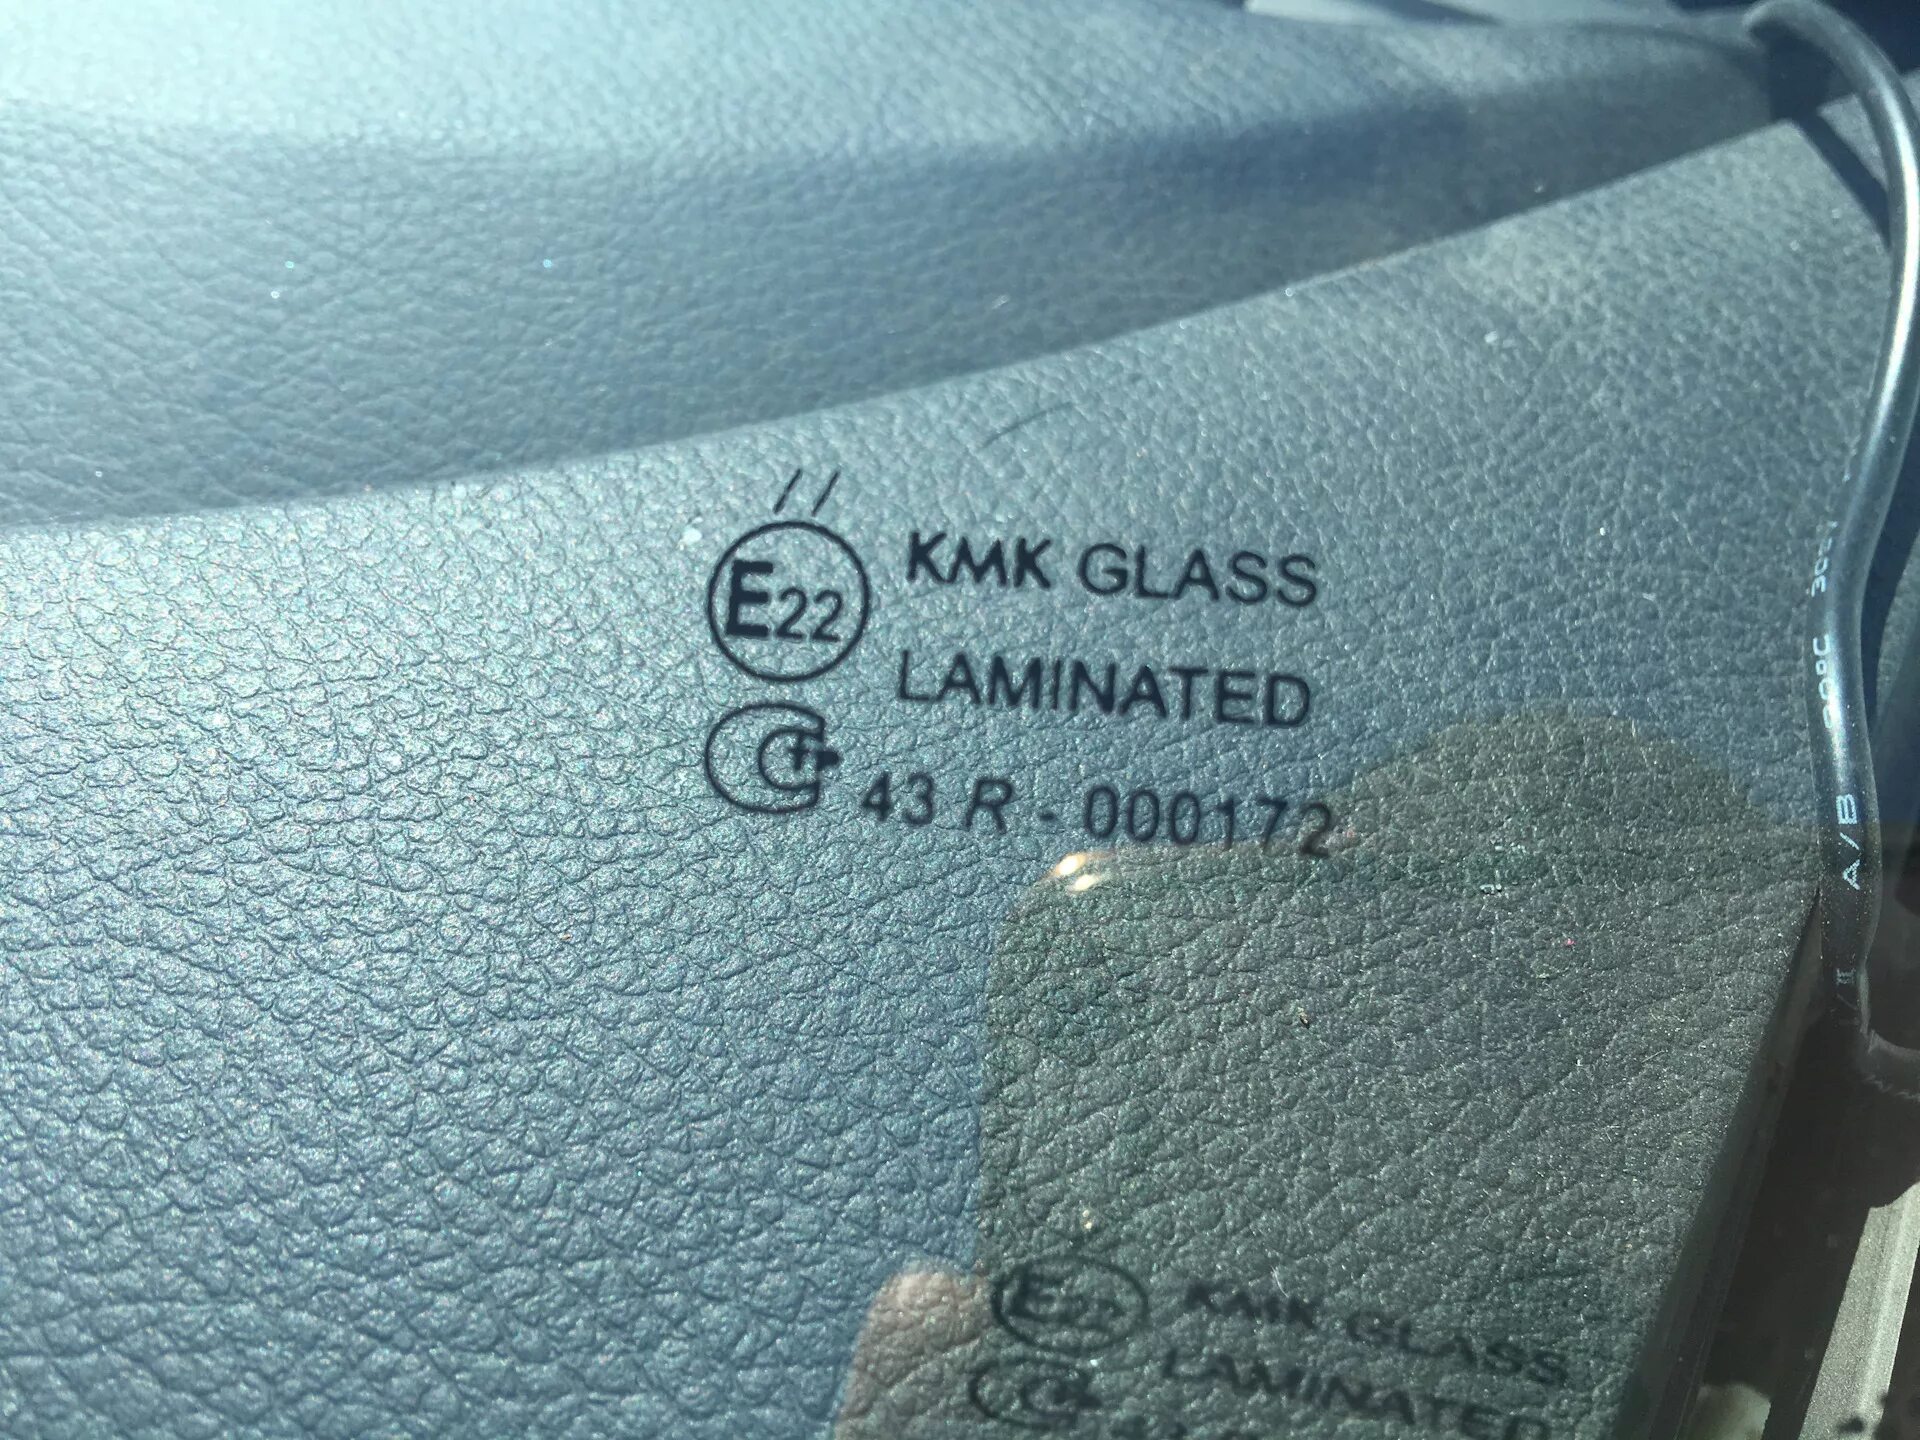 Стекла кмк отзывы. KMK Glass Laminated 43r 000171. KMK Glass vazs0070. Маркировка стекла триплекс. KMK Glass 4166agngn.